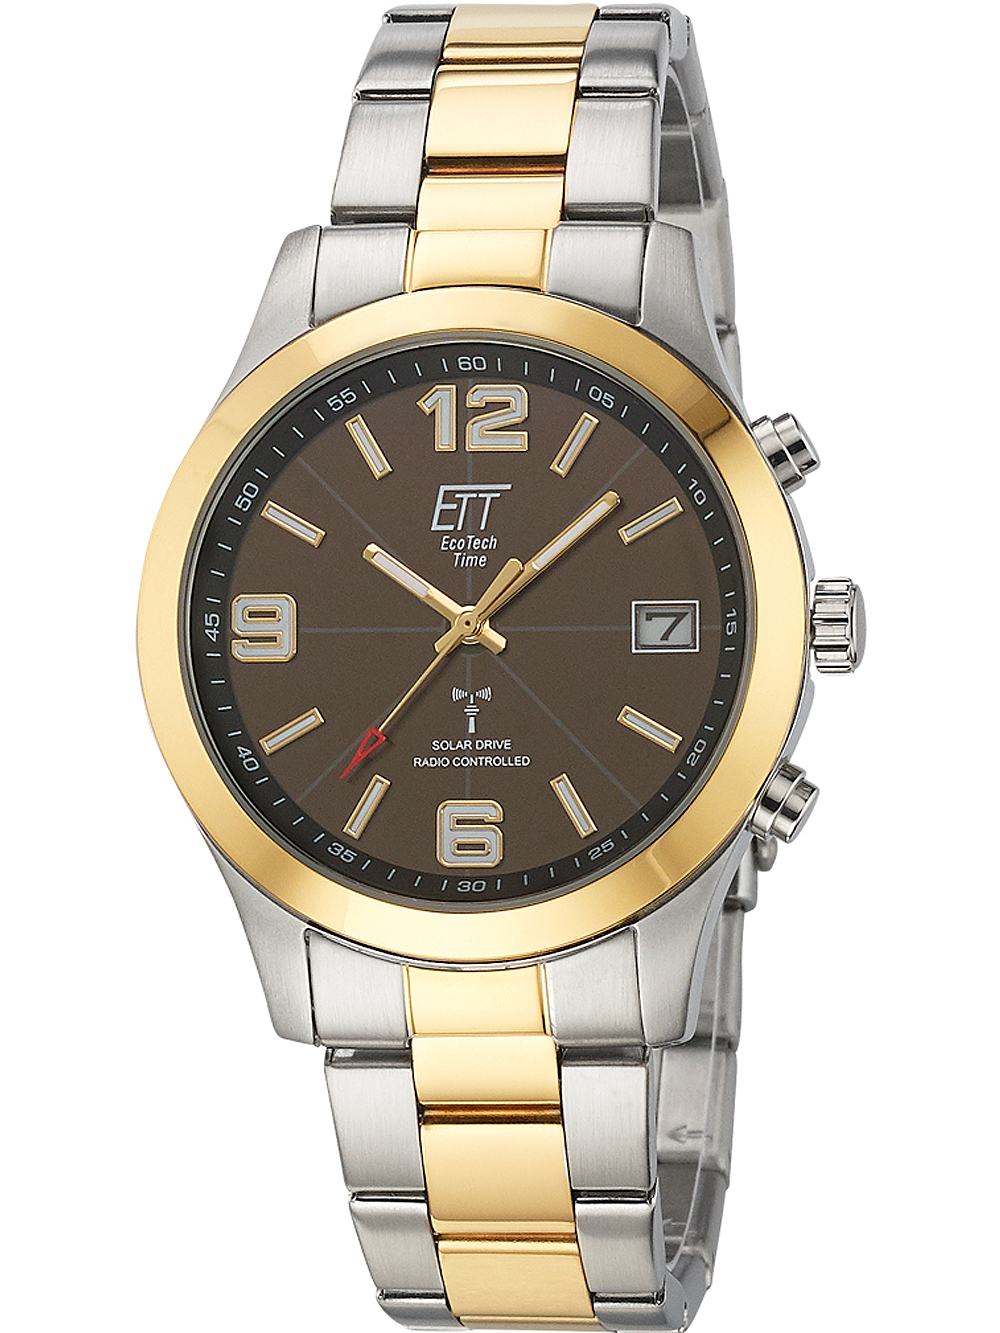 Uhren - ETT Eco Tech Time kaufen